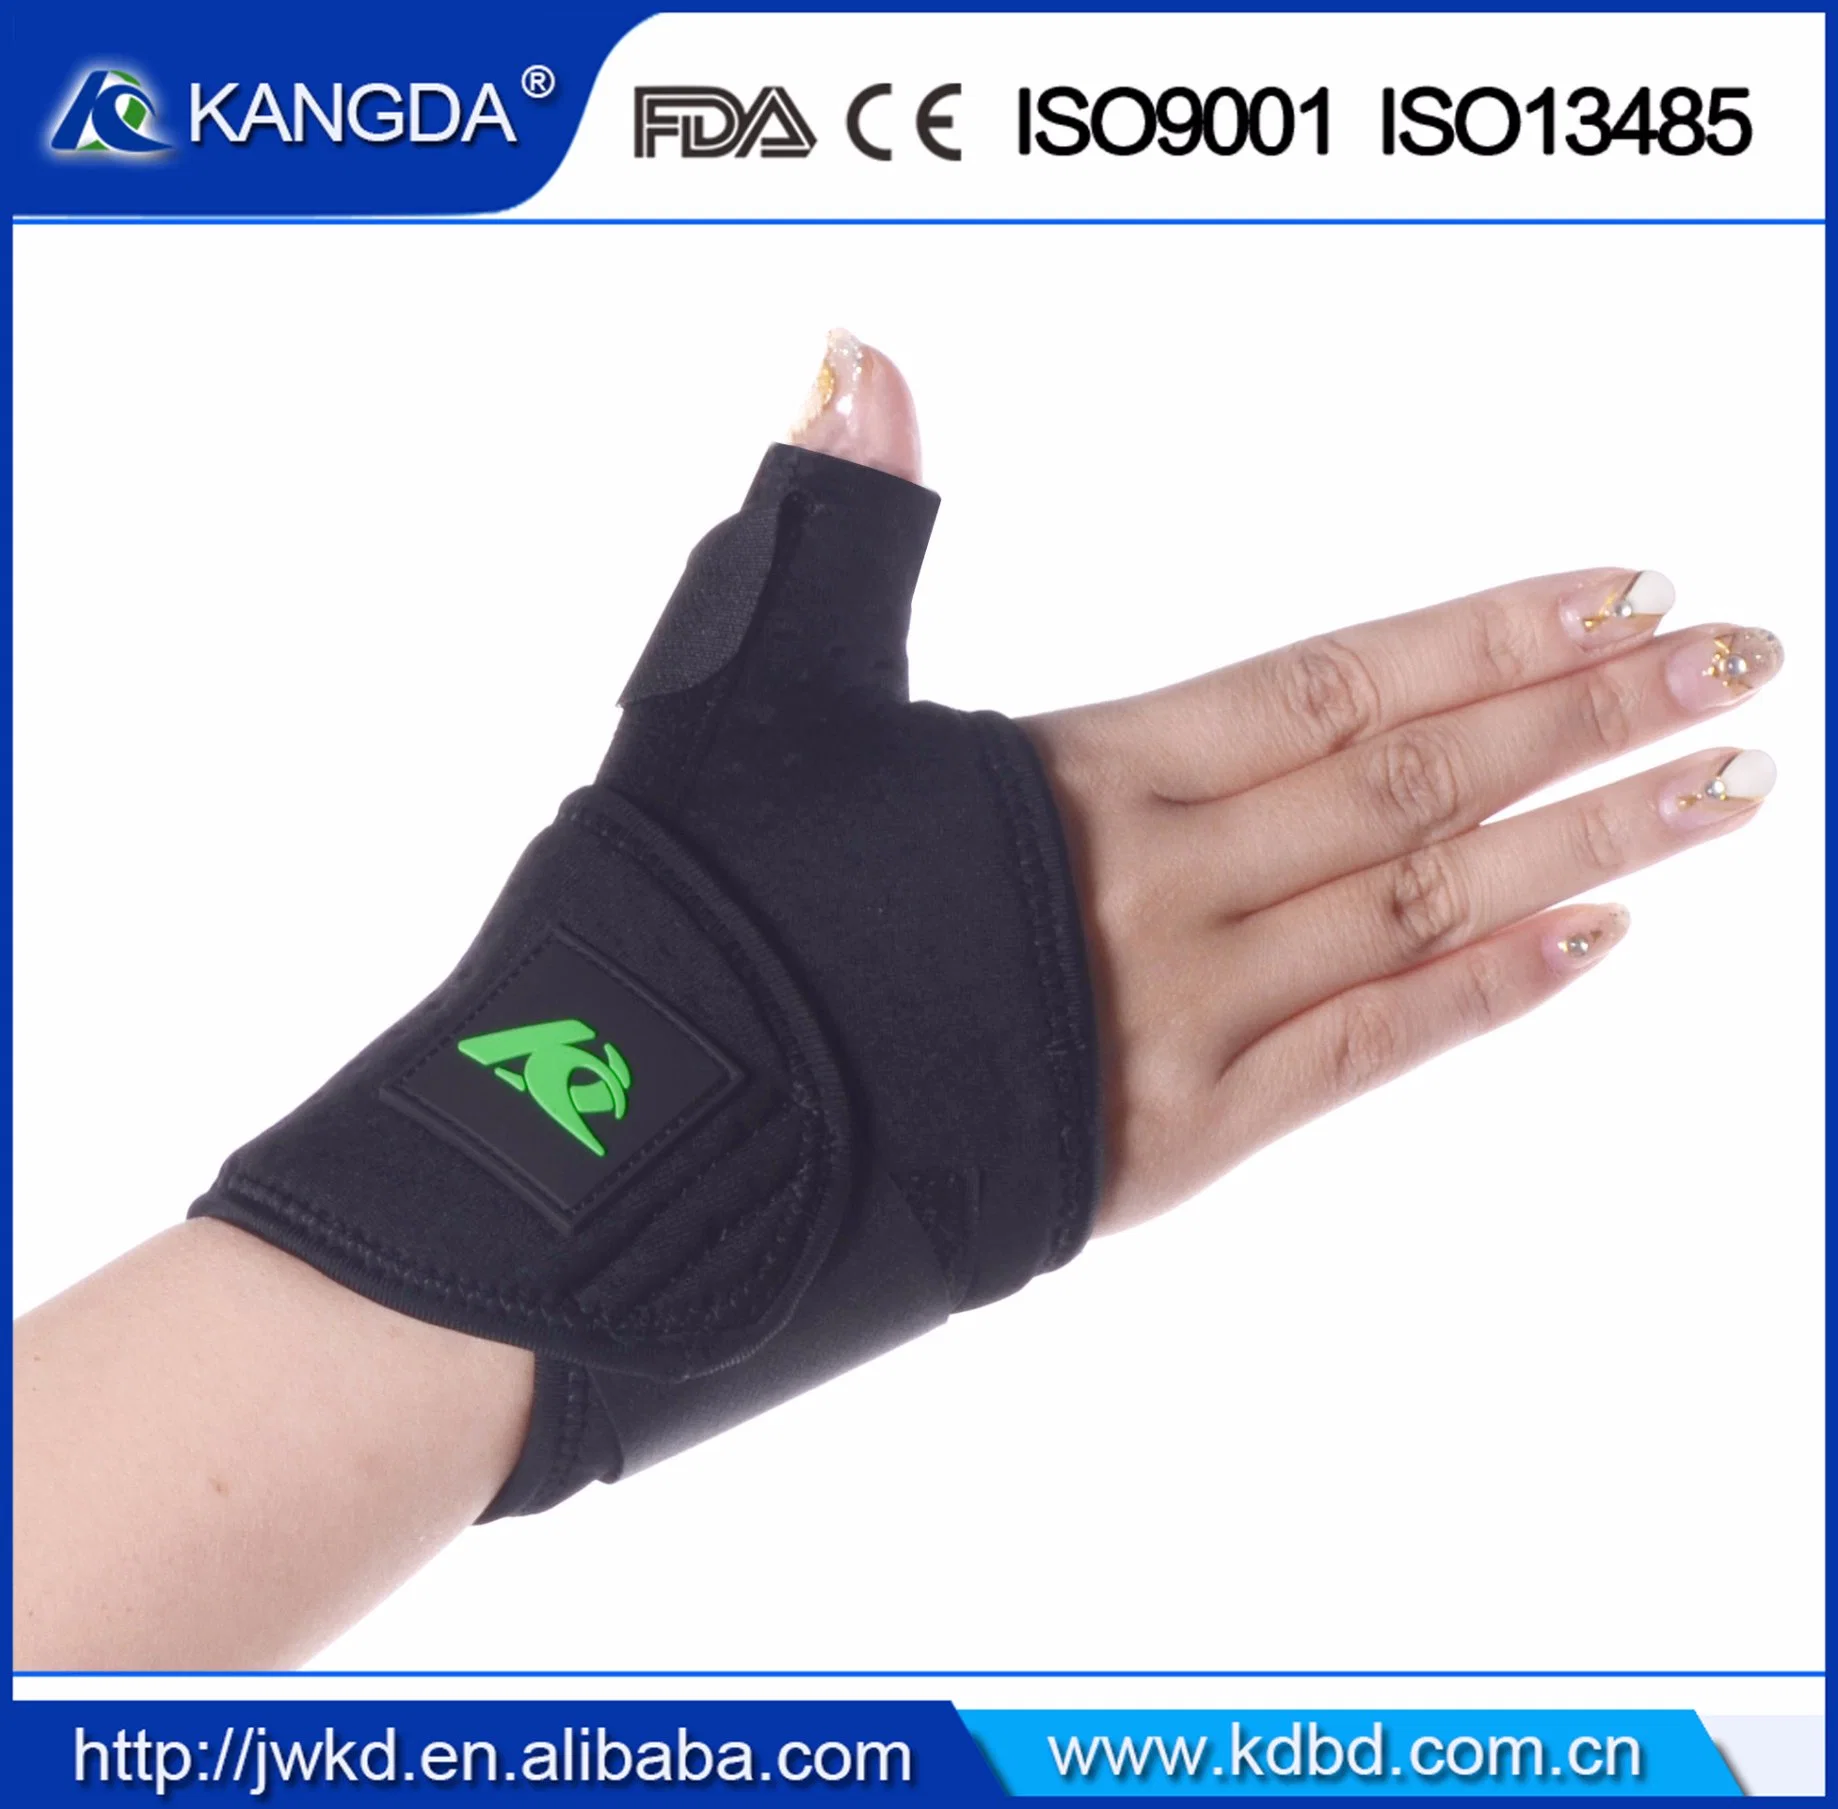 Thumb Spica Splint- Thumb Brace for Arthritis or Soft Tissue Injuries